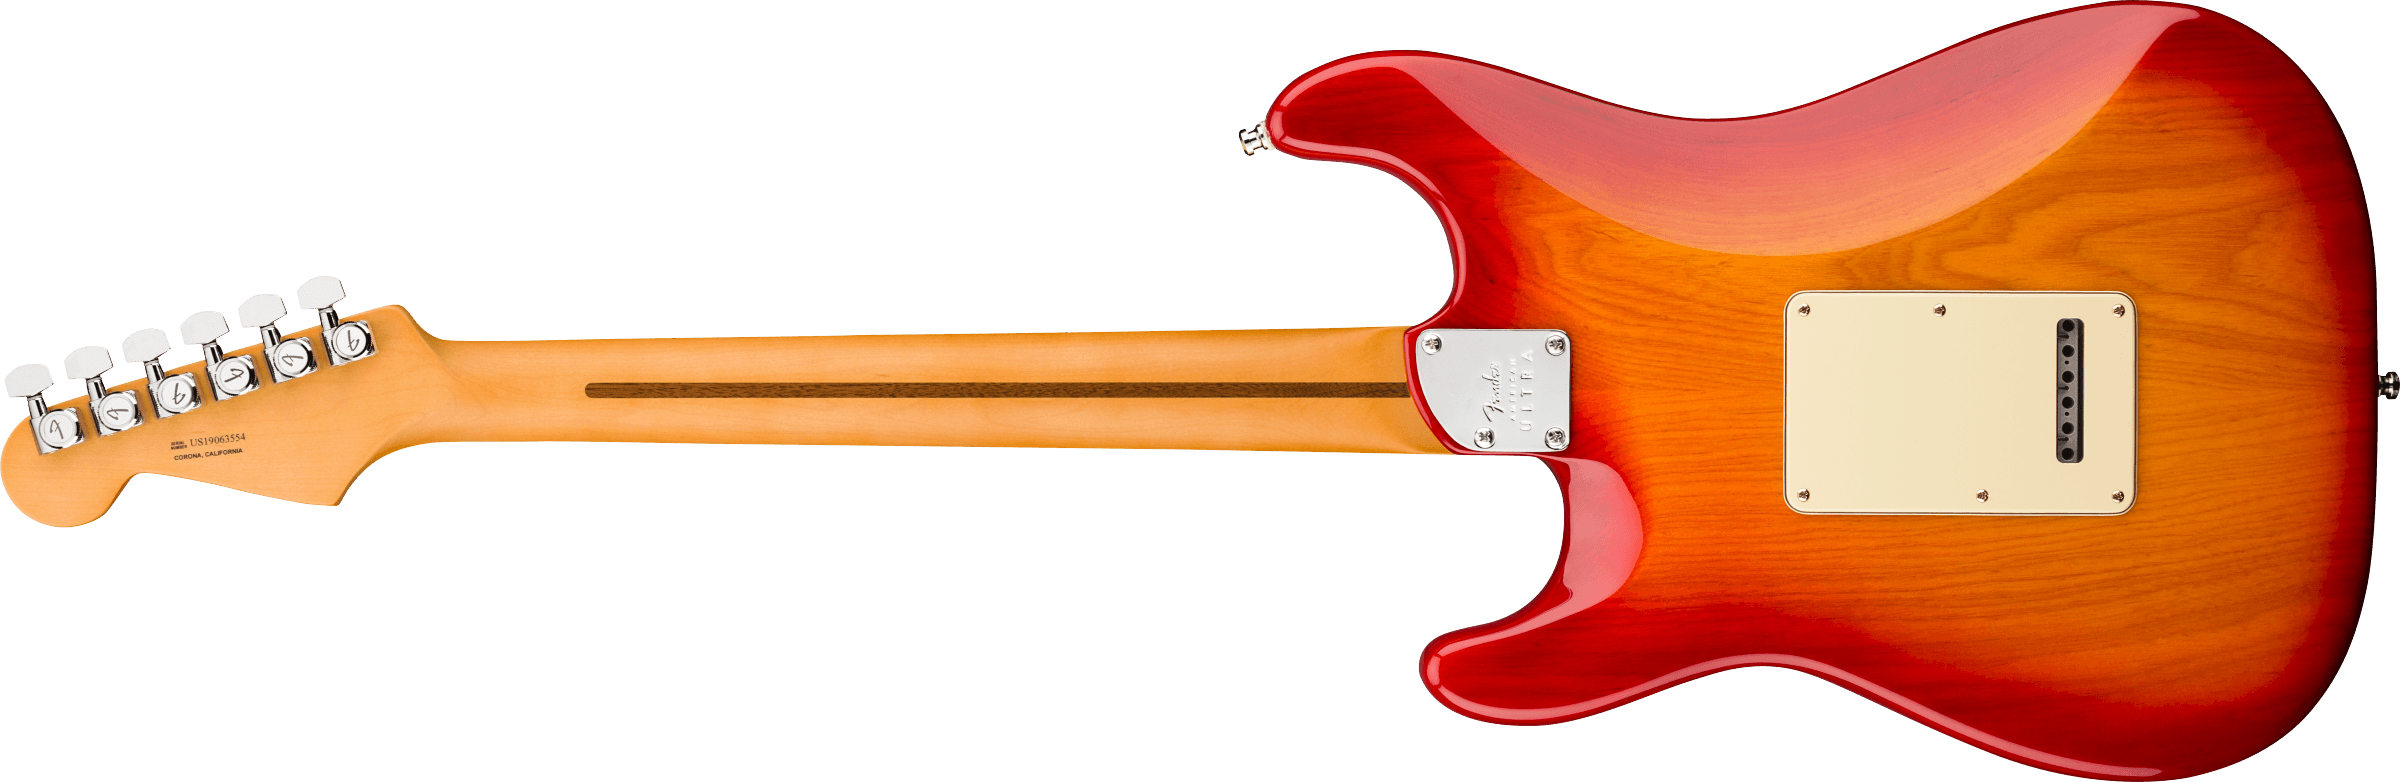 Fender Strat American Ultra Hss 2019 Usa Mn - Plasma Red Burst - Str shape electric guitar - Variation 1